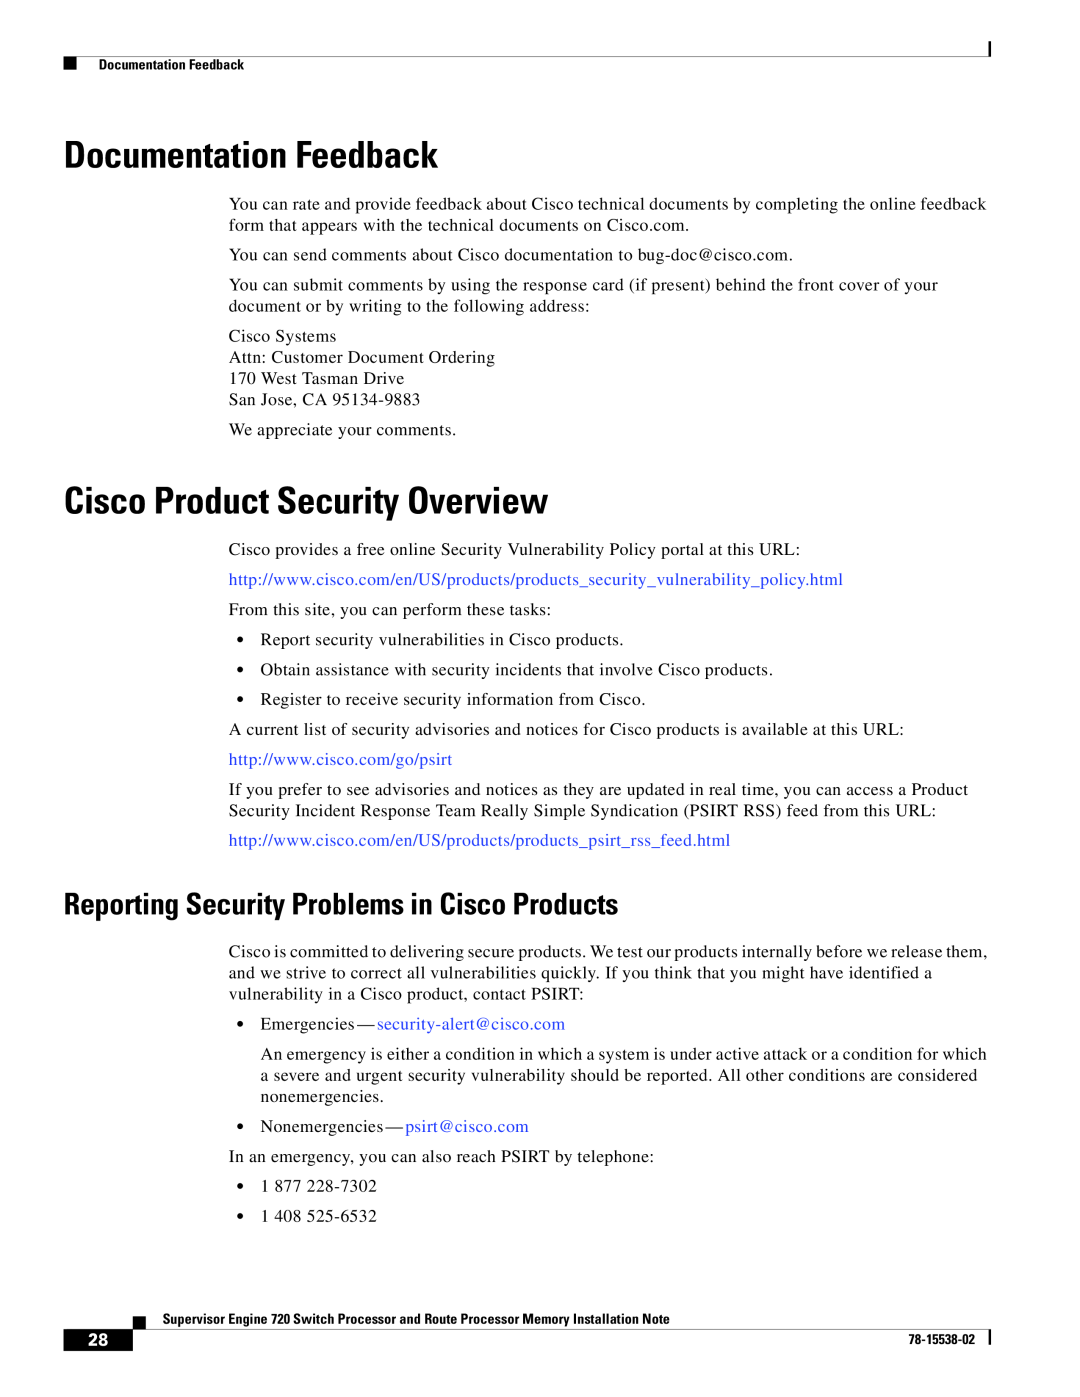 Cisco Systems MEM-MSFC2-512MB=, MEM-S2-512MB=, MEM-S3-1GB= manual Documentation Feedback, Cisco Product Security Overview 